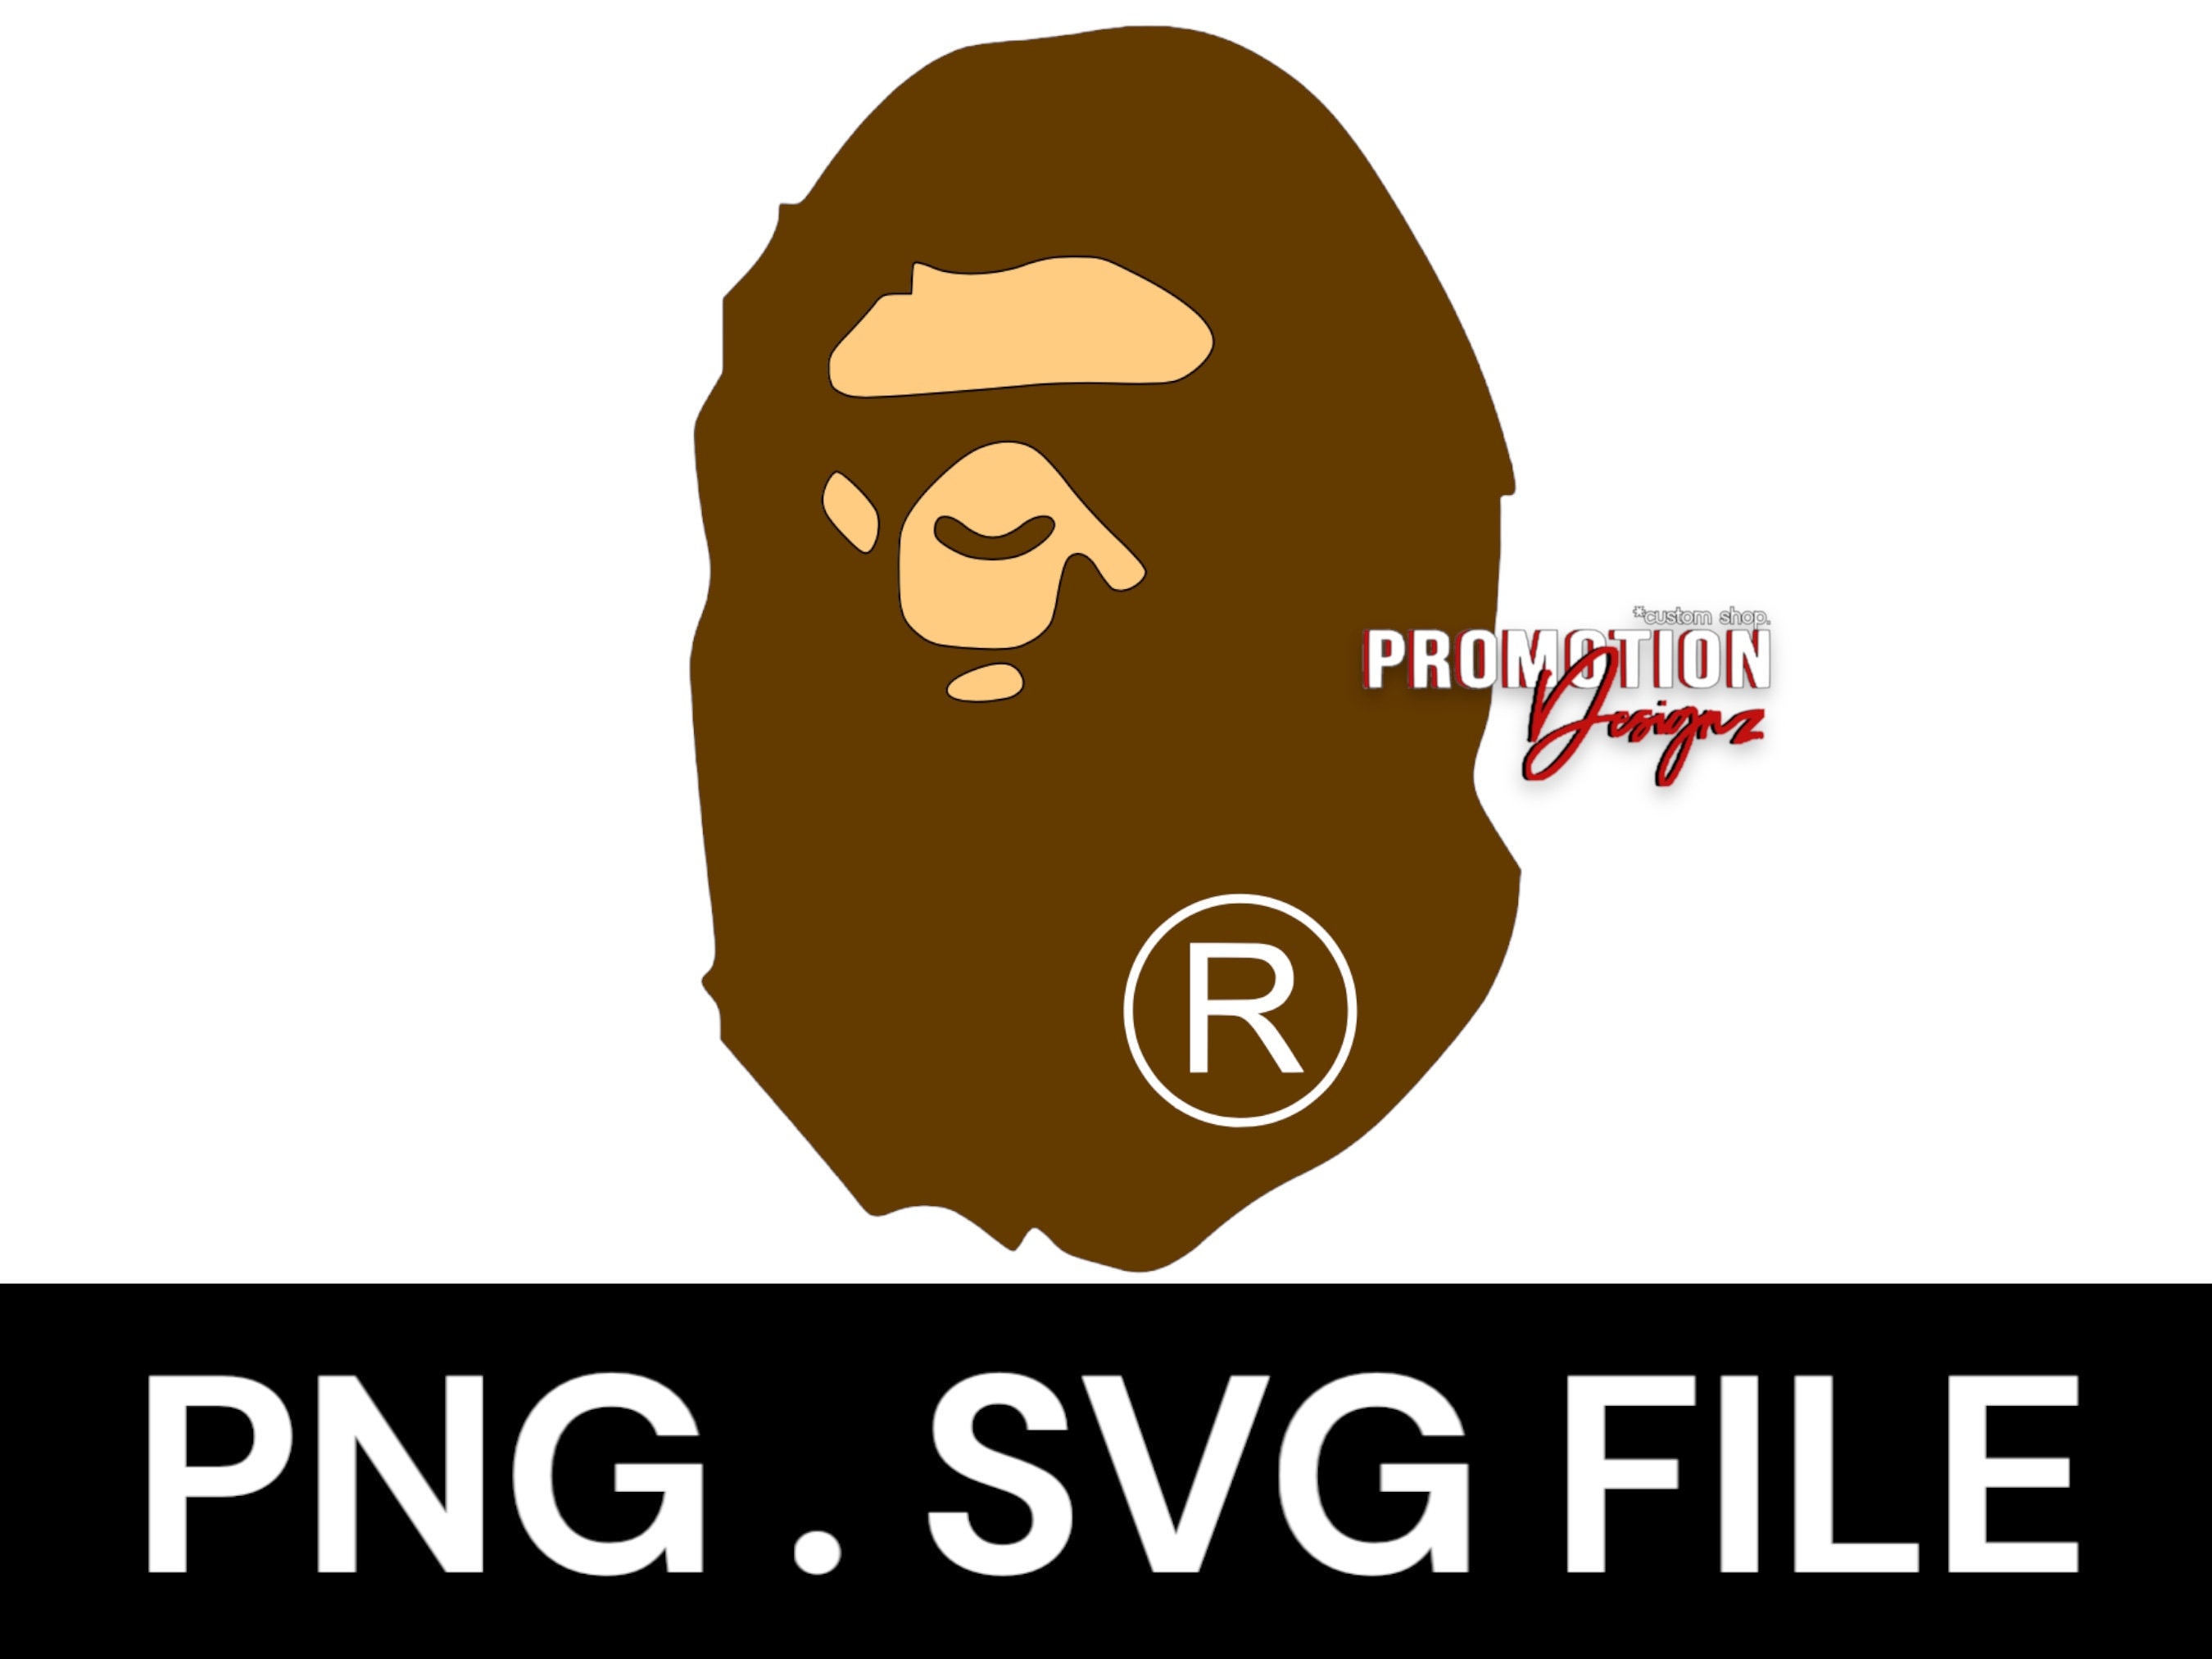 A Bathing Ape PNG File SVG File Instant Download Cricut - Etsy